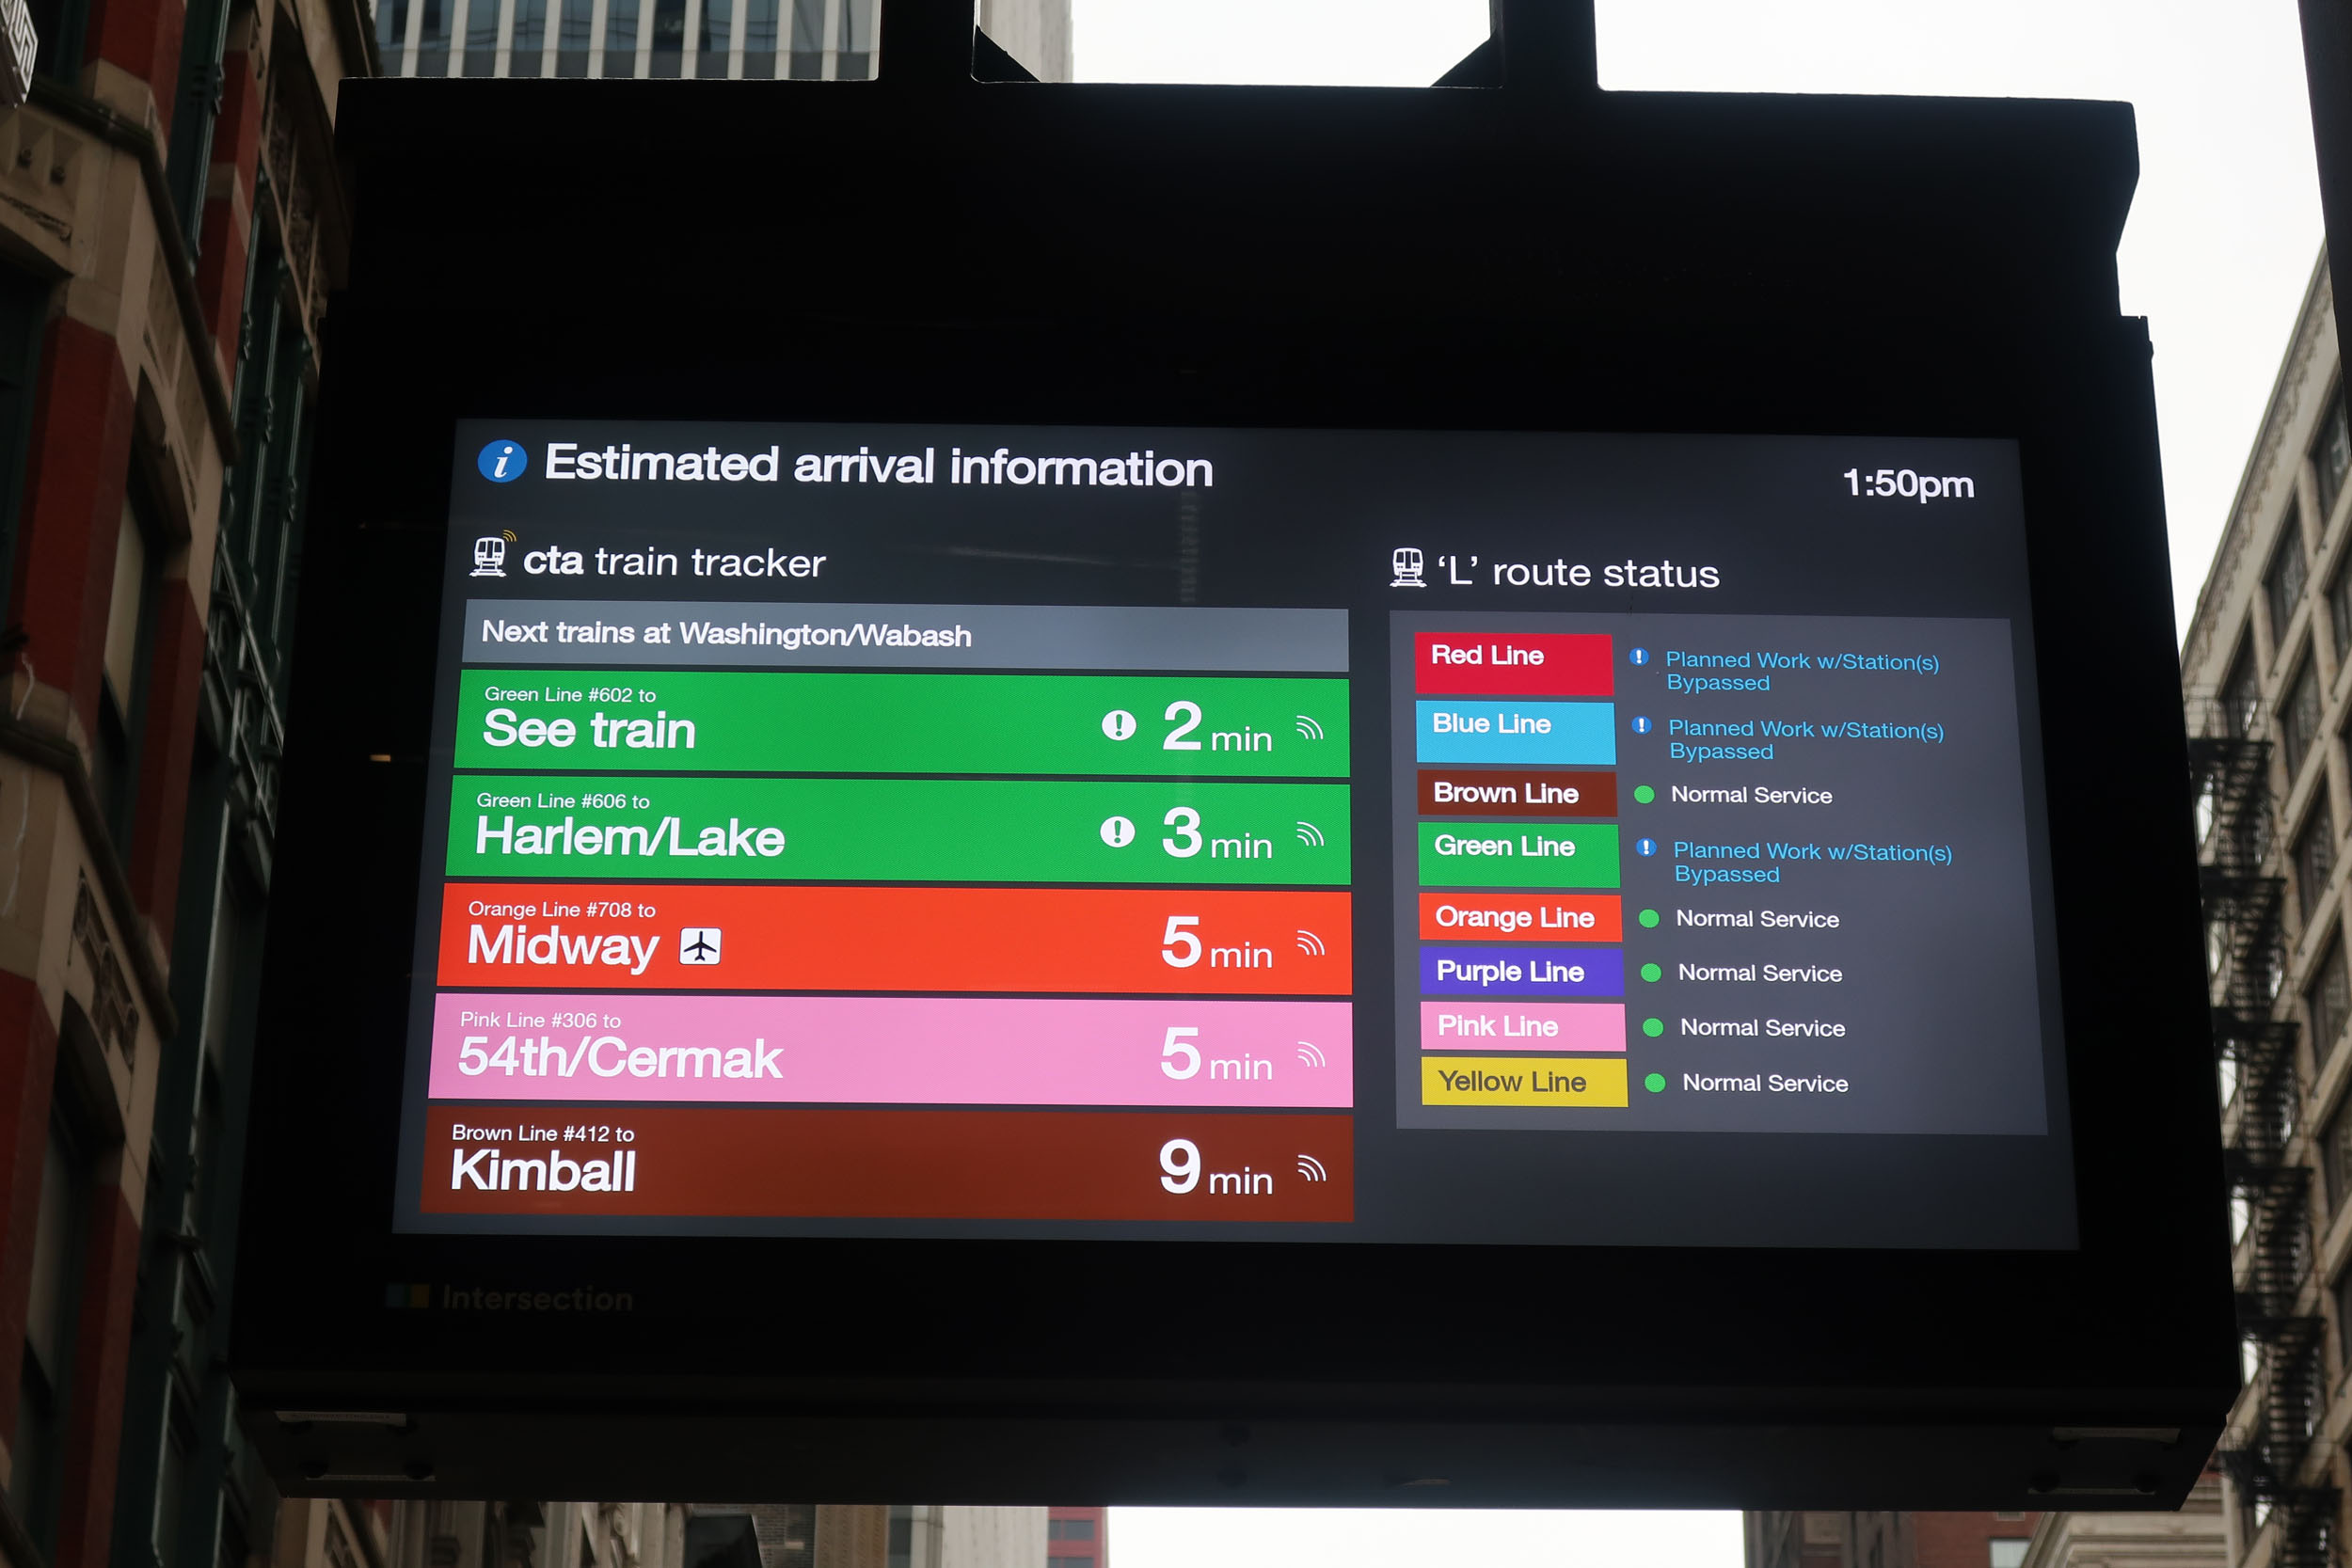 LCD screen showing predicted arrivals at Washington Wabash station